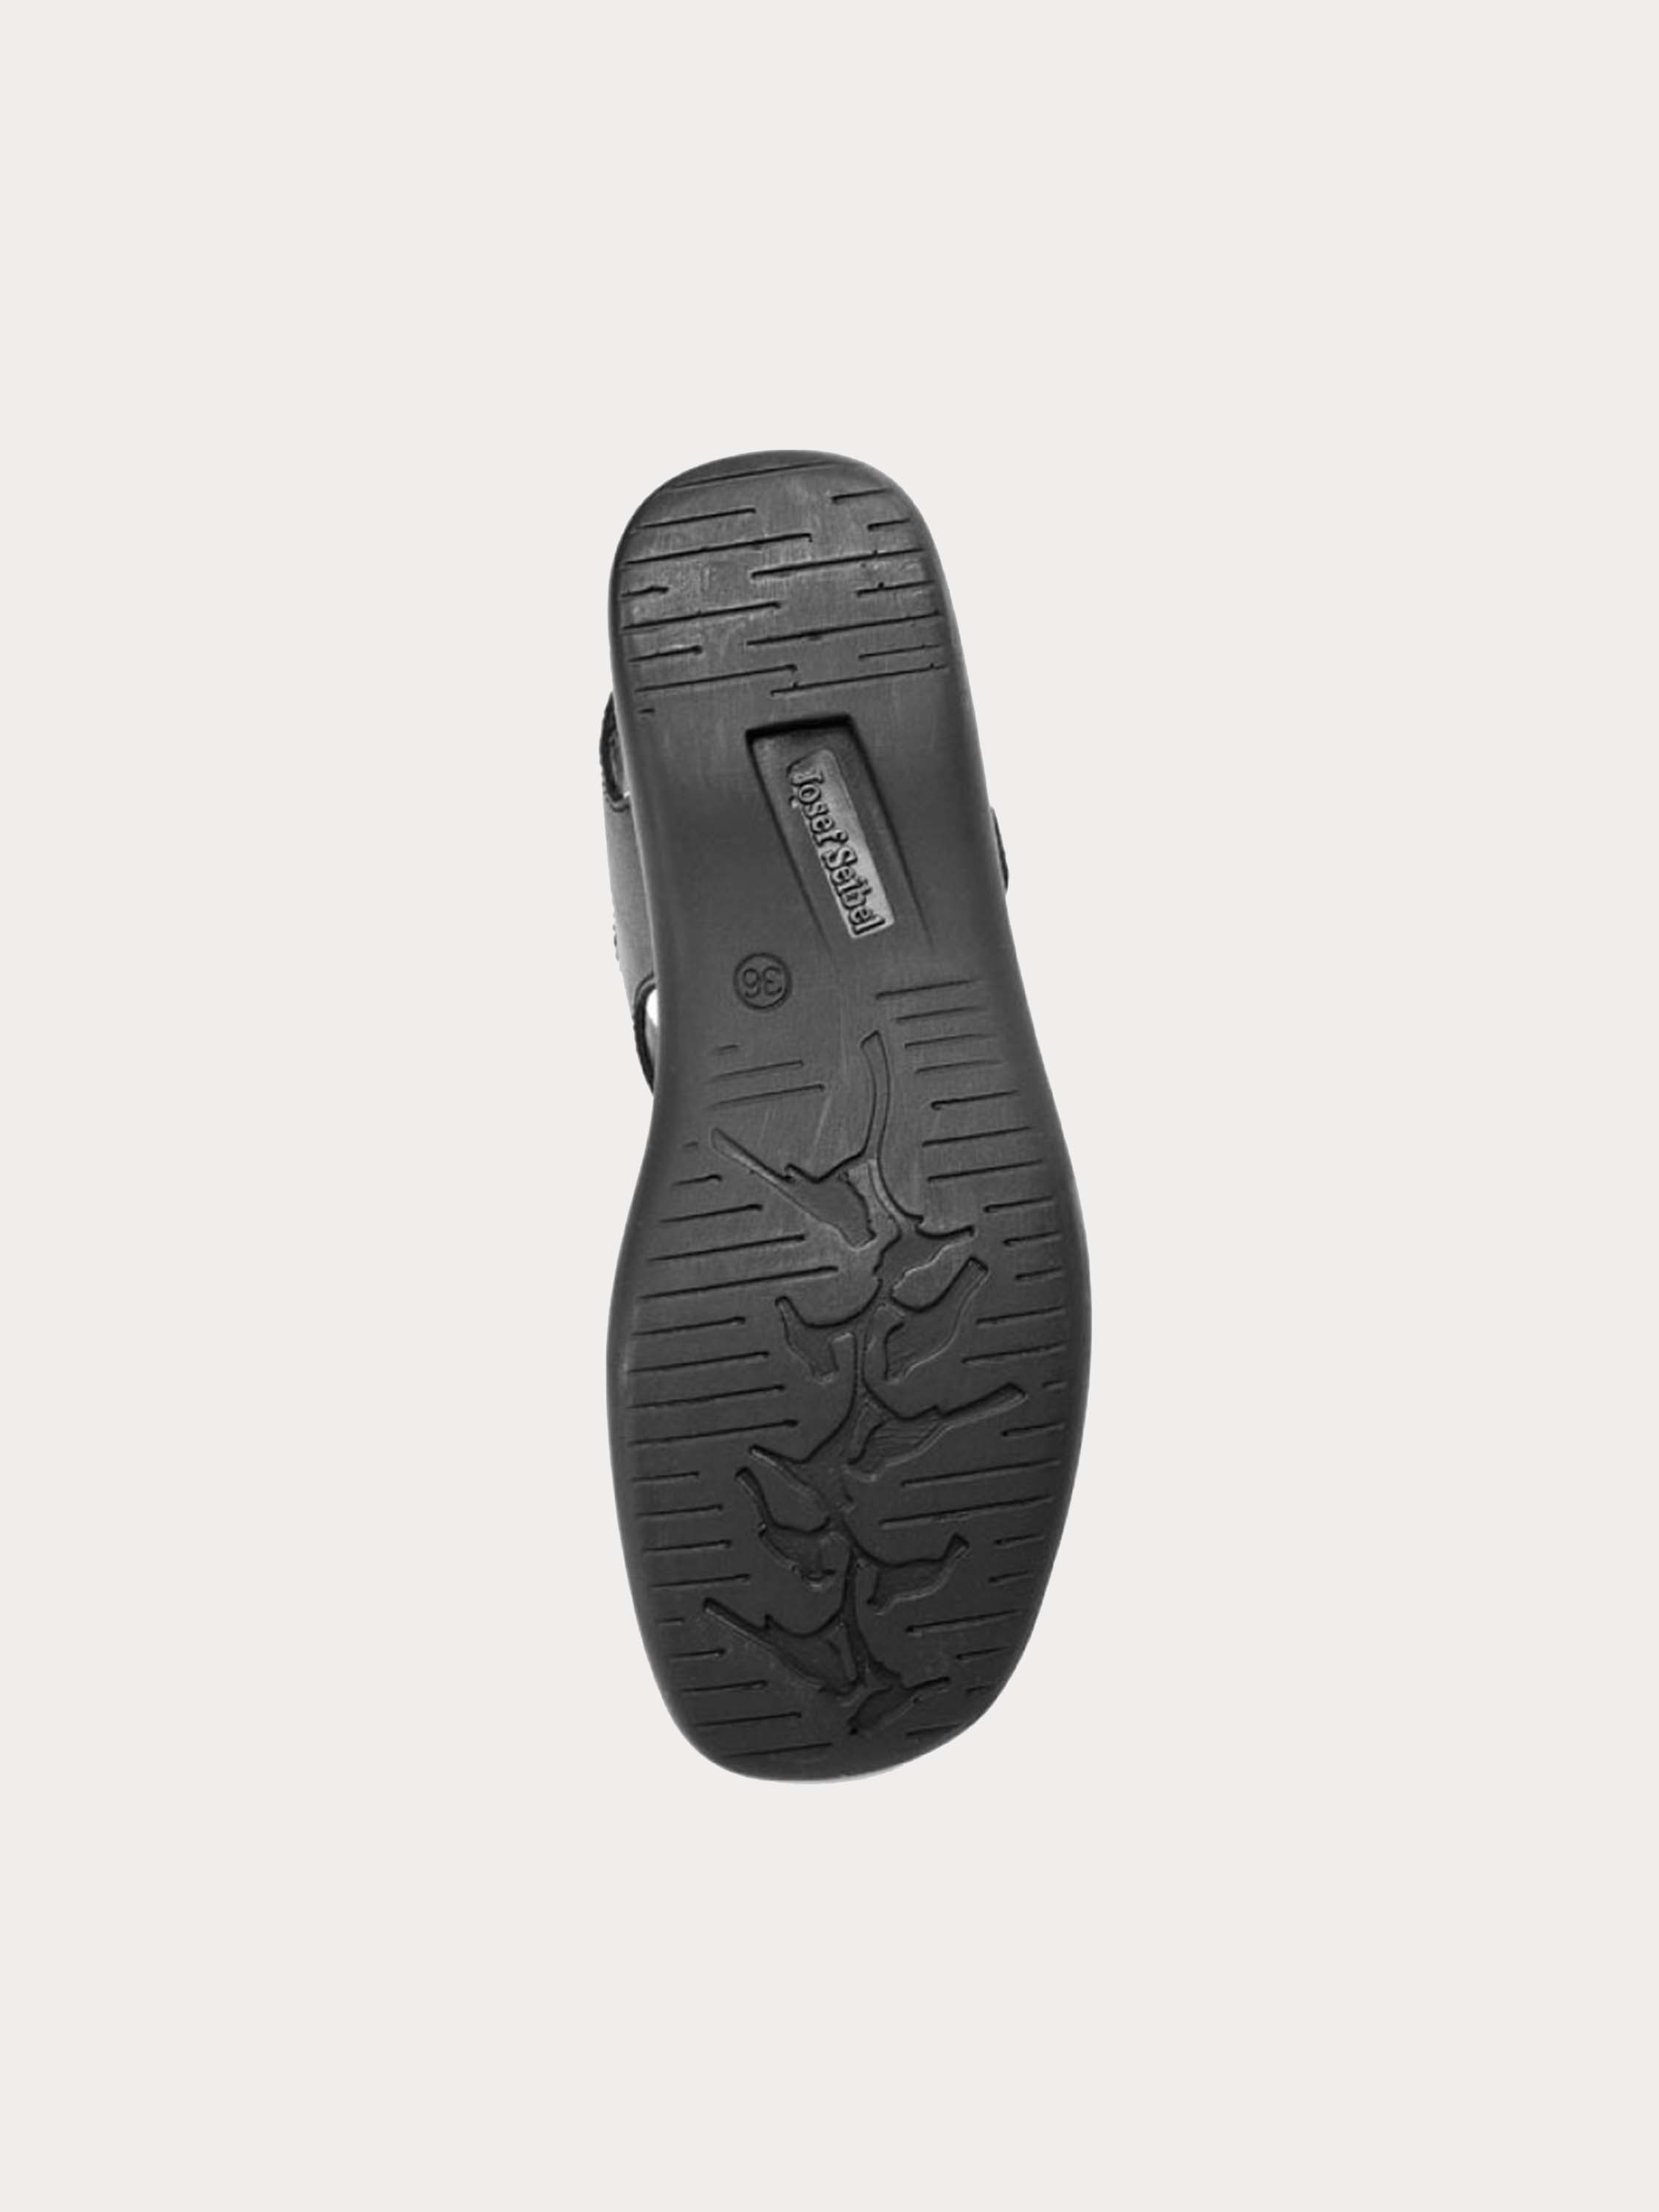 Josef Seibel Lisa 01 Women's Sandals #color_Black